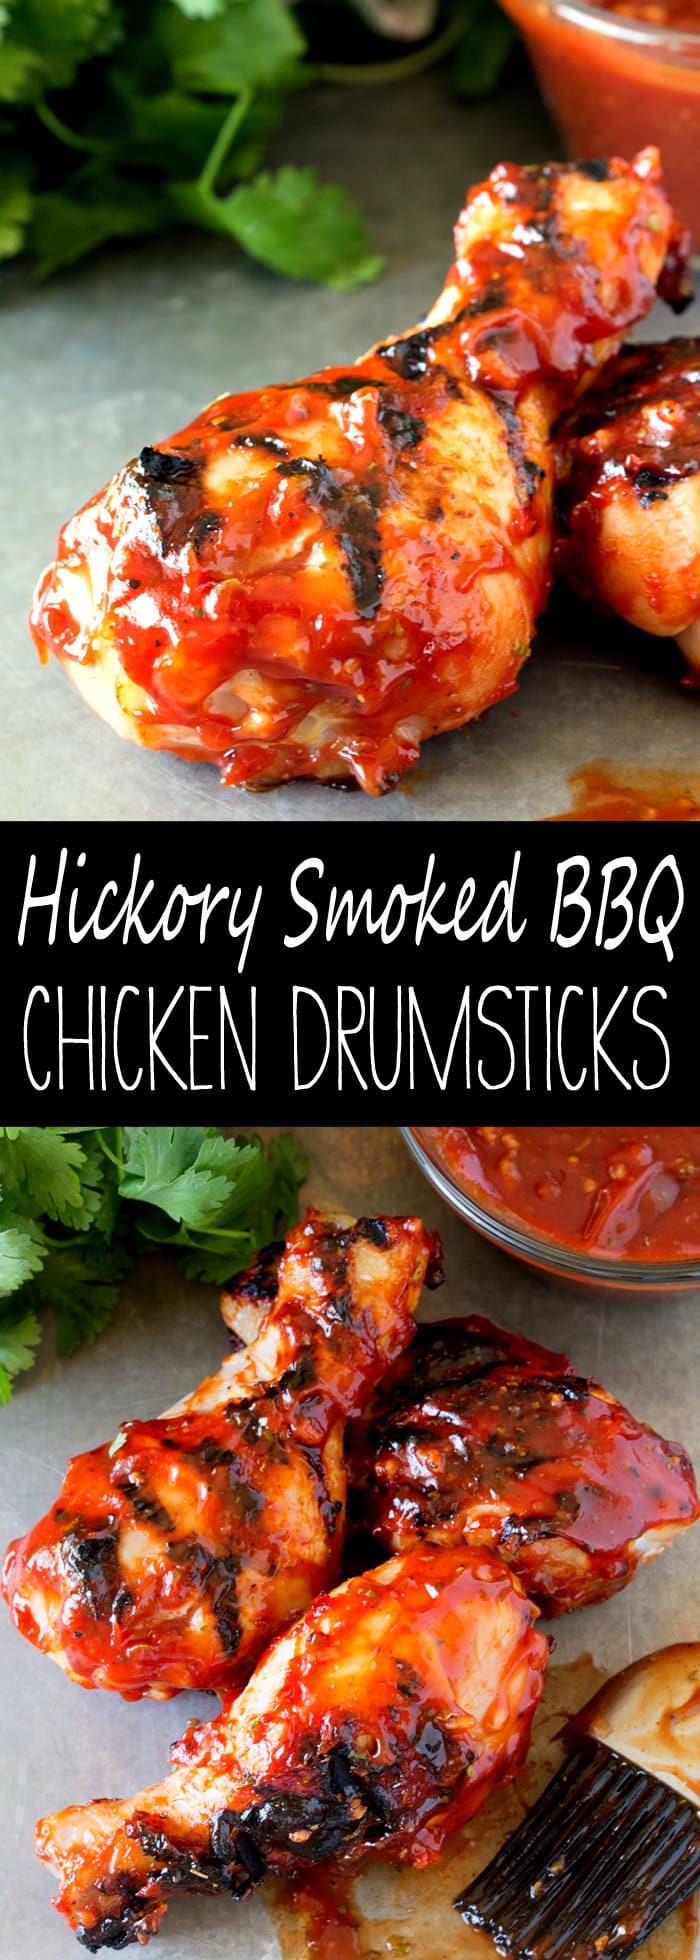 Hickory Smoked BBQ Chicken Drumsticks